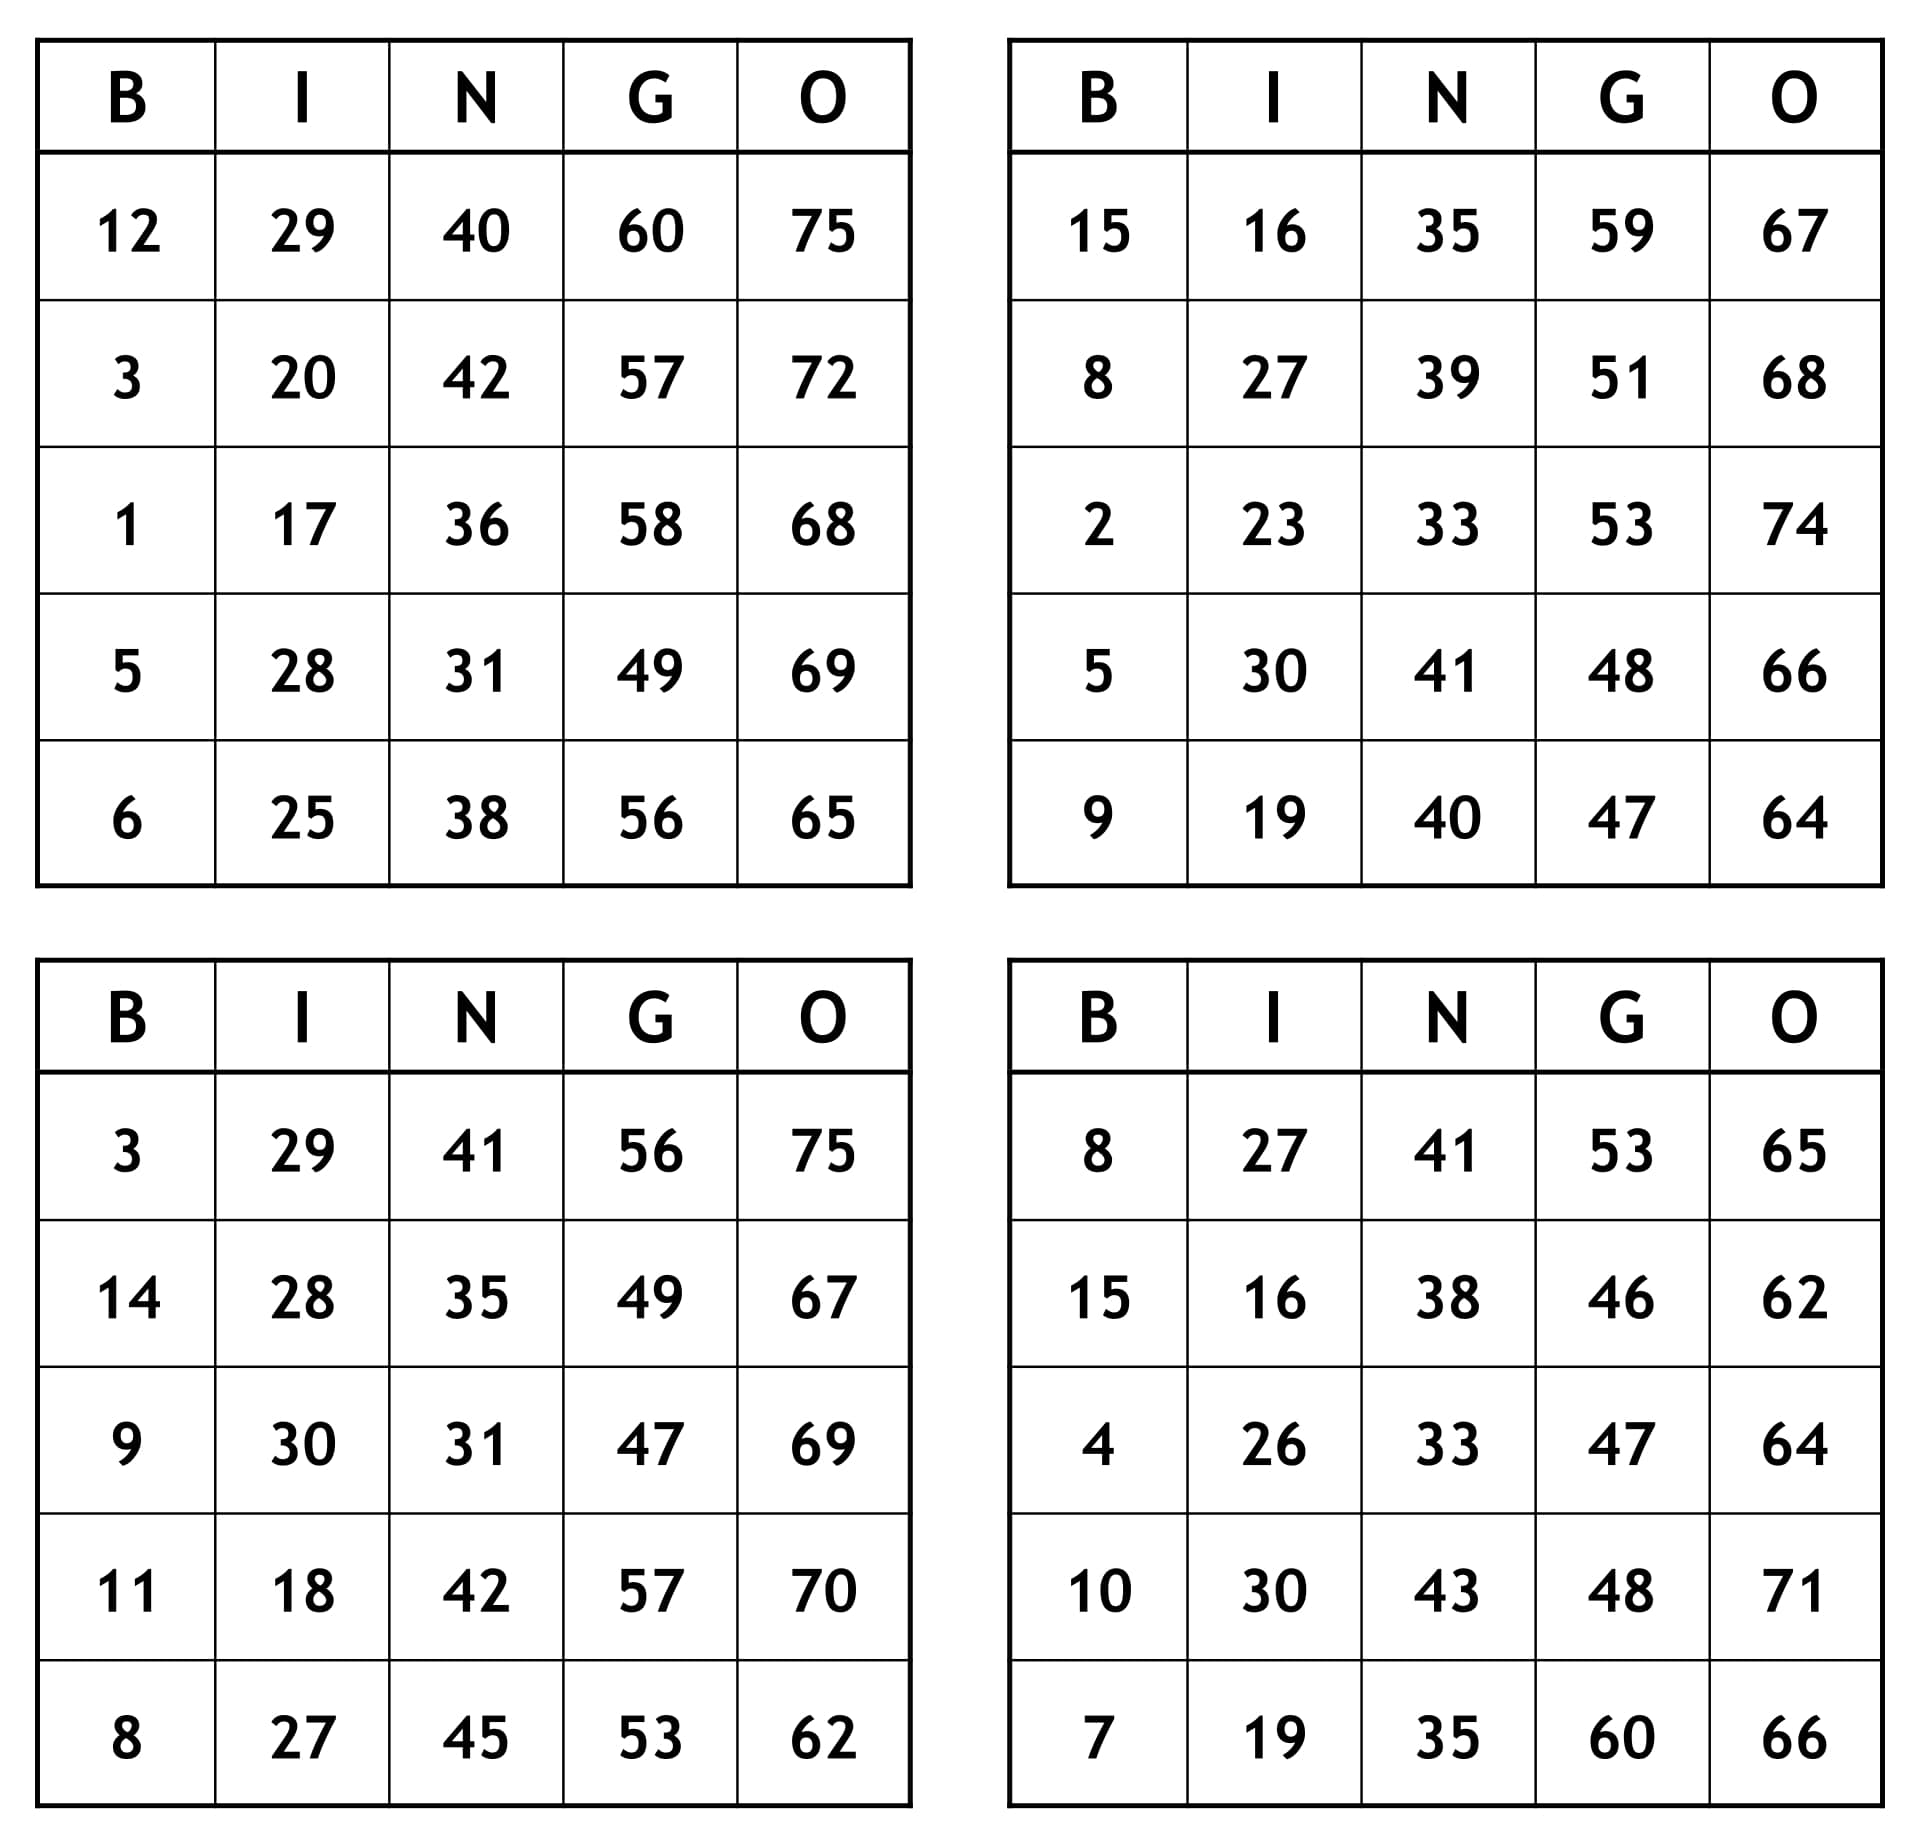 Free Printable Bingo Sheets 1 75_53241